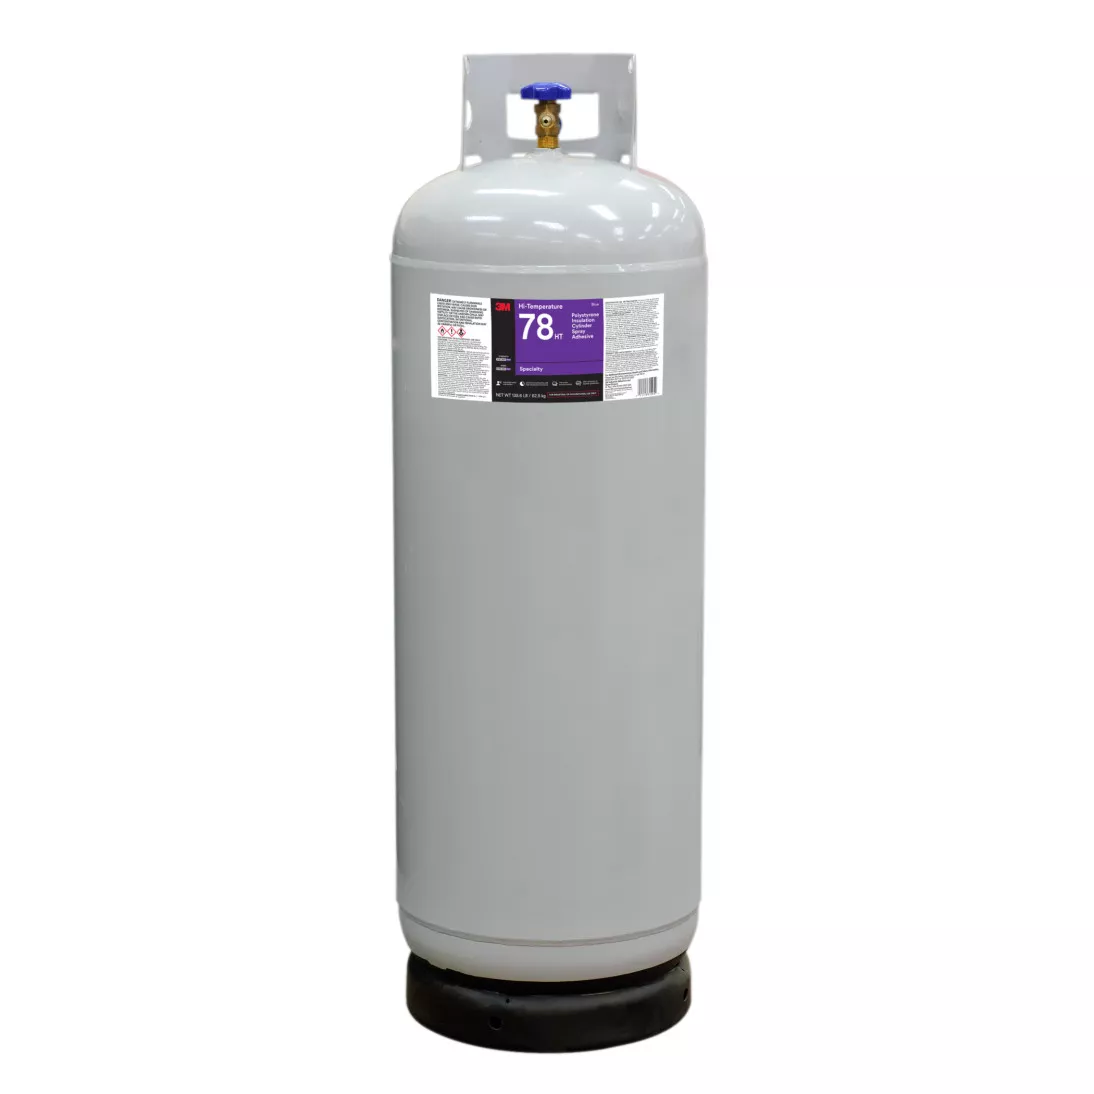 3M™ Hi-Temperature Polystyrene Insulation 78 HT Cylinder Spray Adhesive,
Blue, Intermediate Cylinder (Net Wt 138.6 lb)